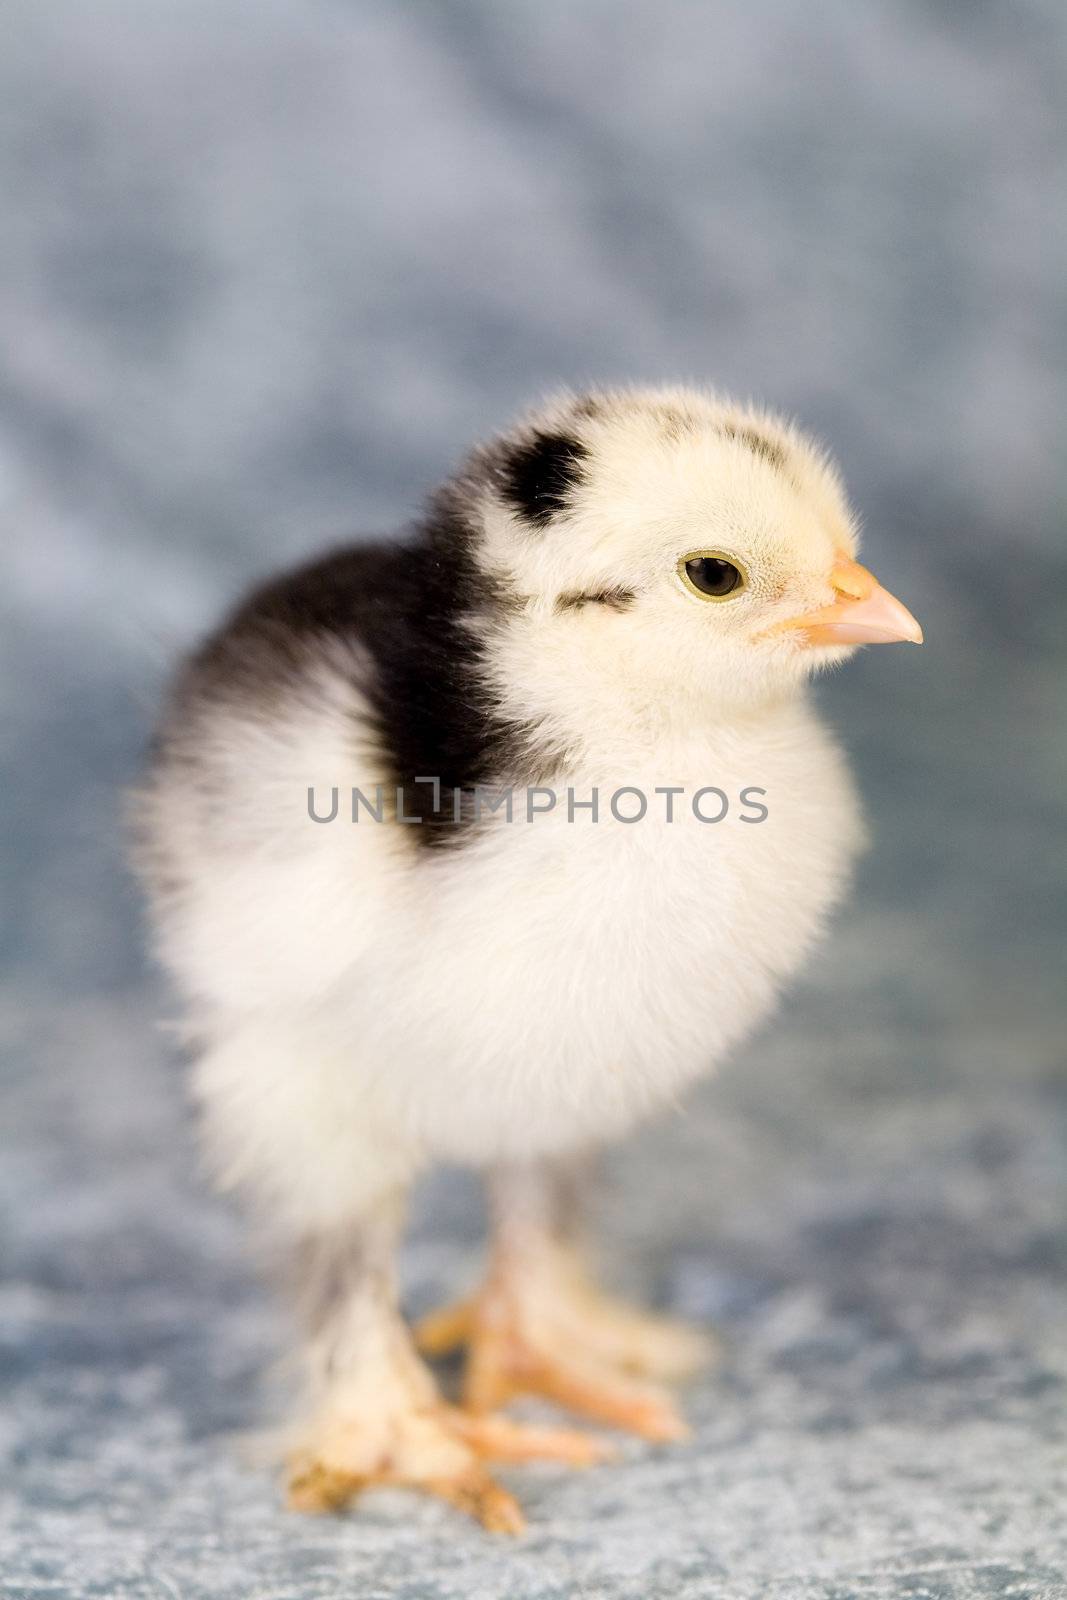 Cute little brahma chicken standing on blue background